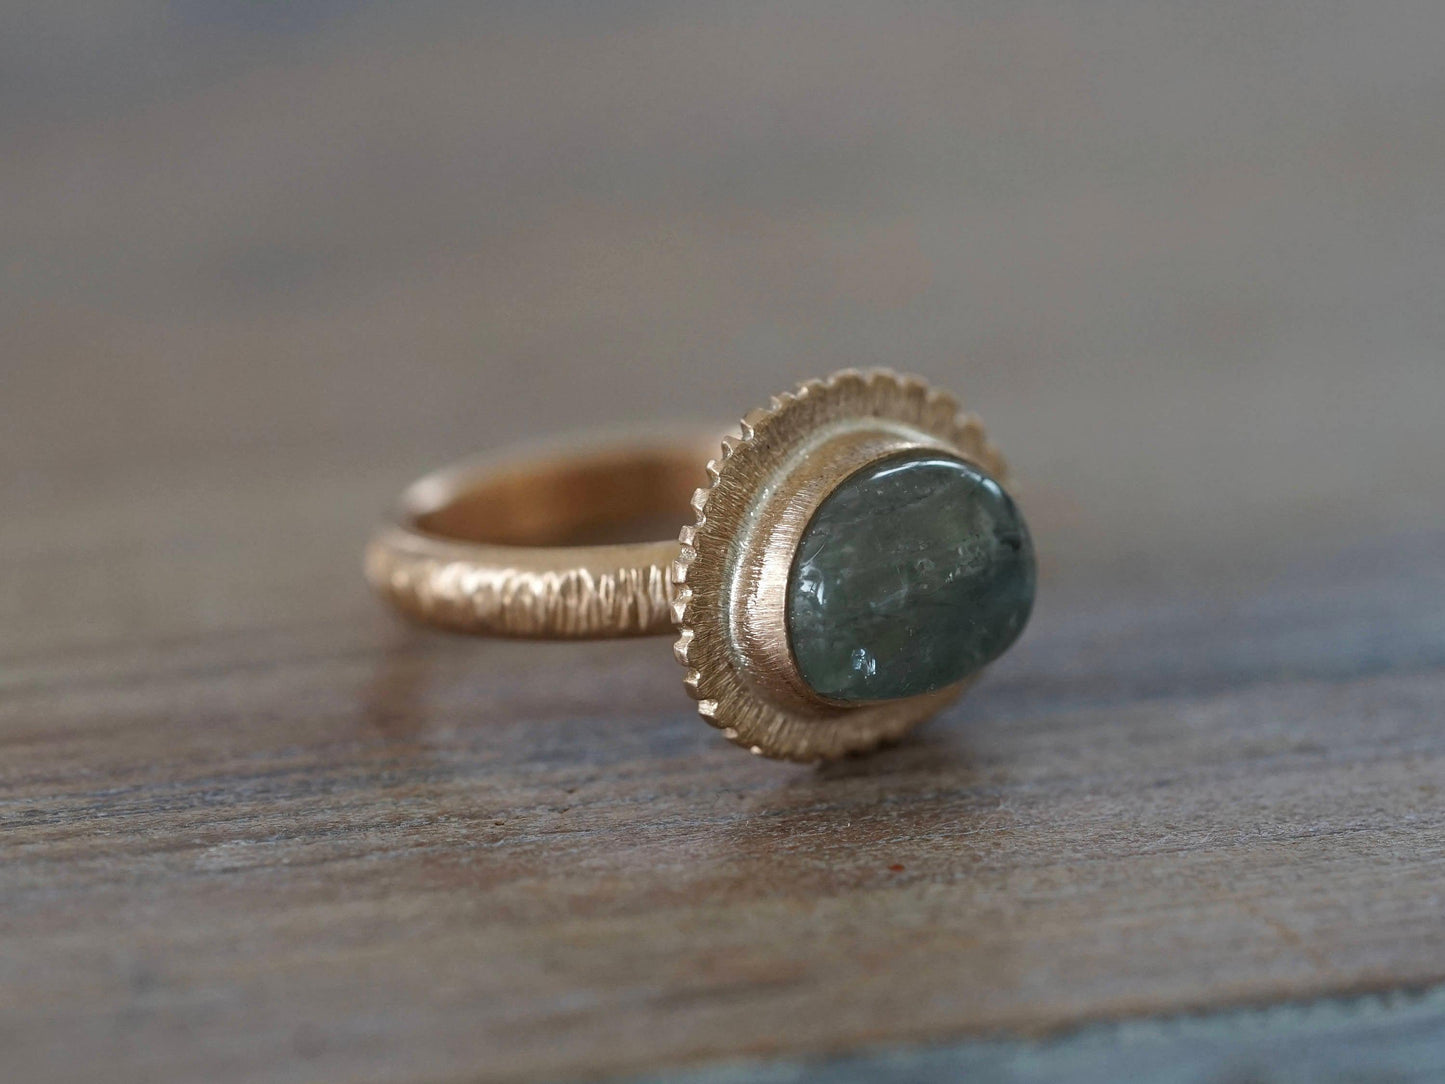 Bronze and aqua green tourmaline ring, size 6.5